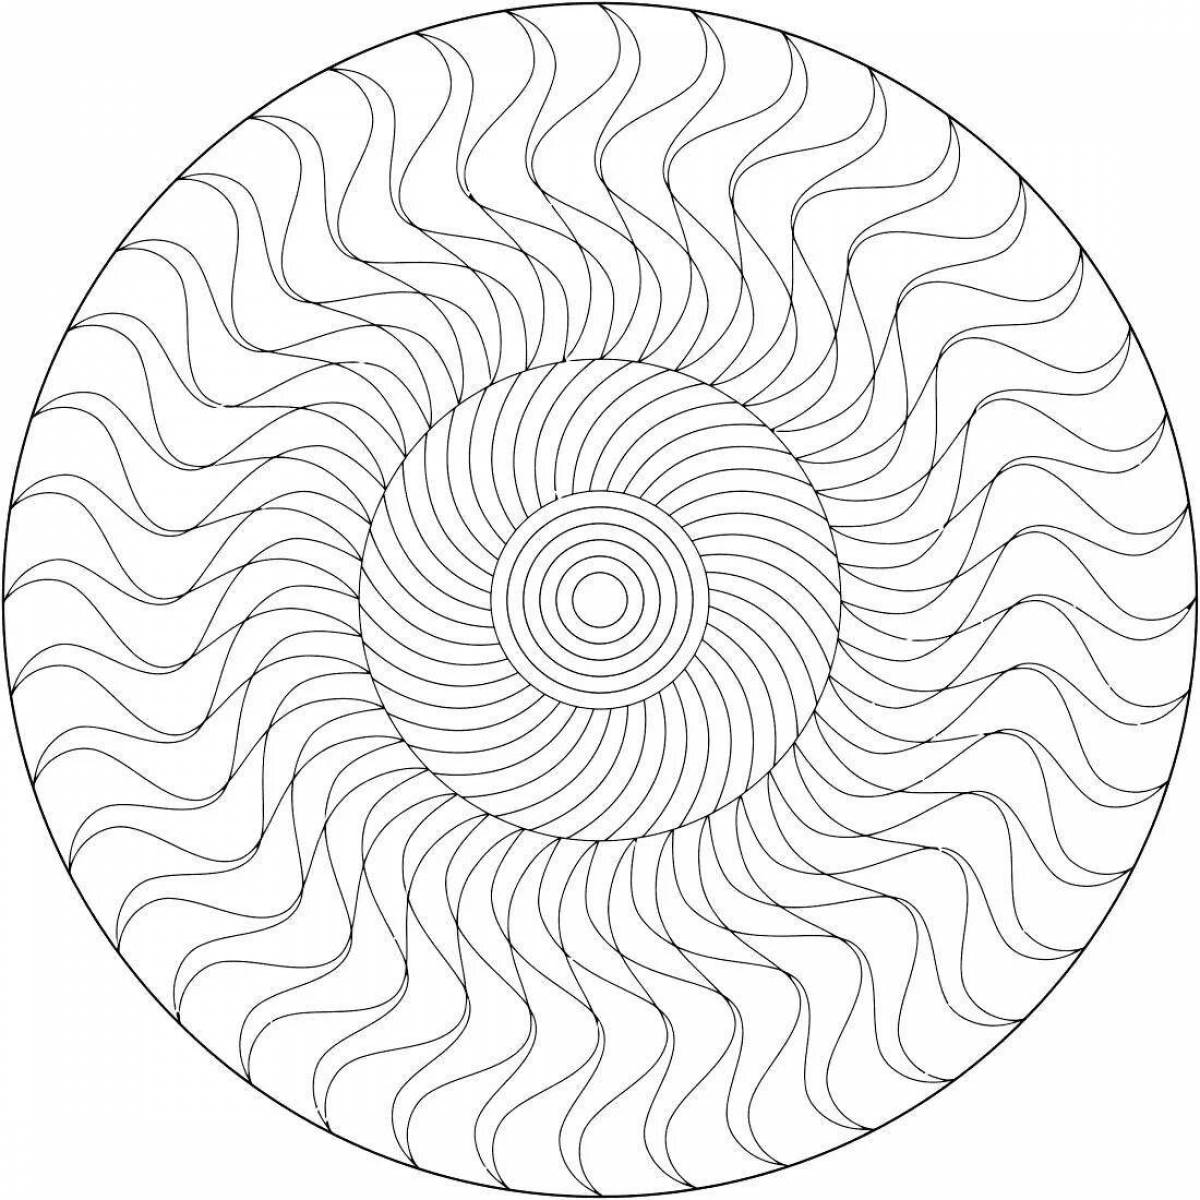 Circular spiral coloring page dynamic